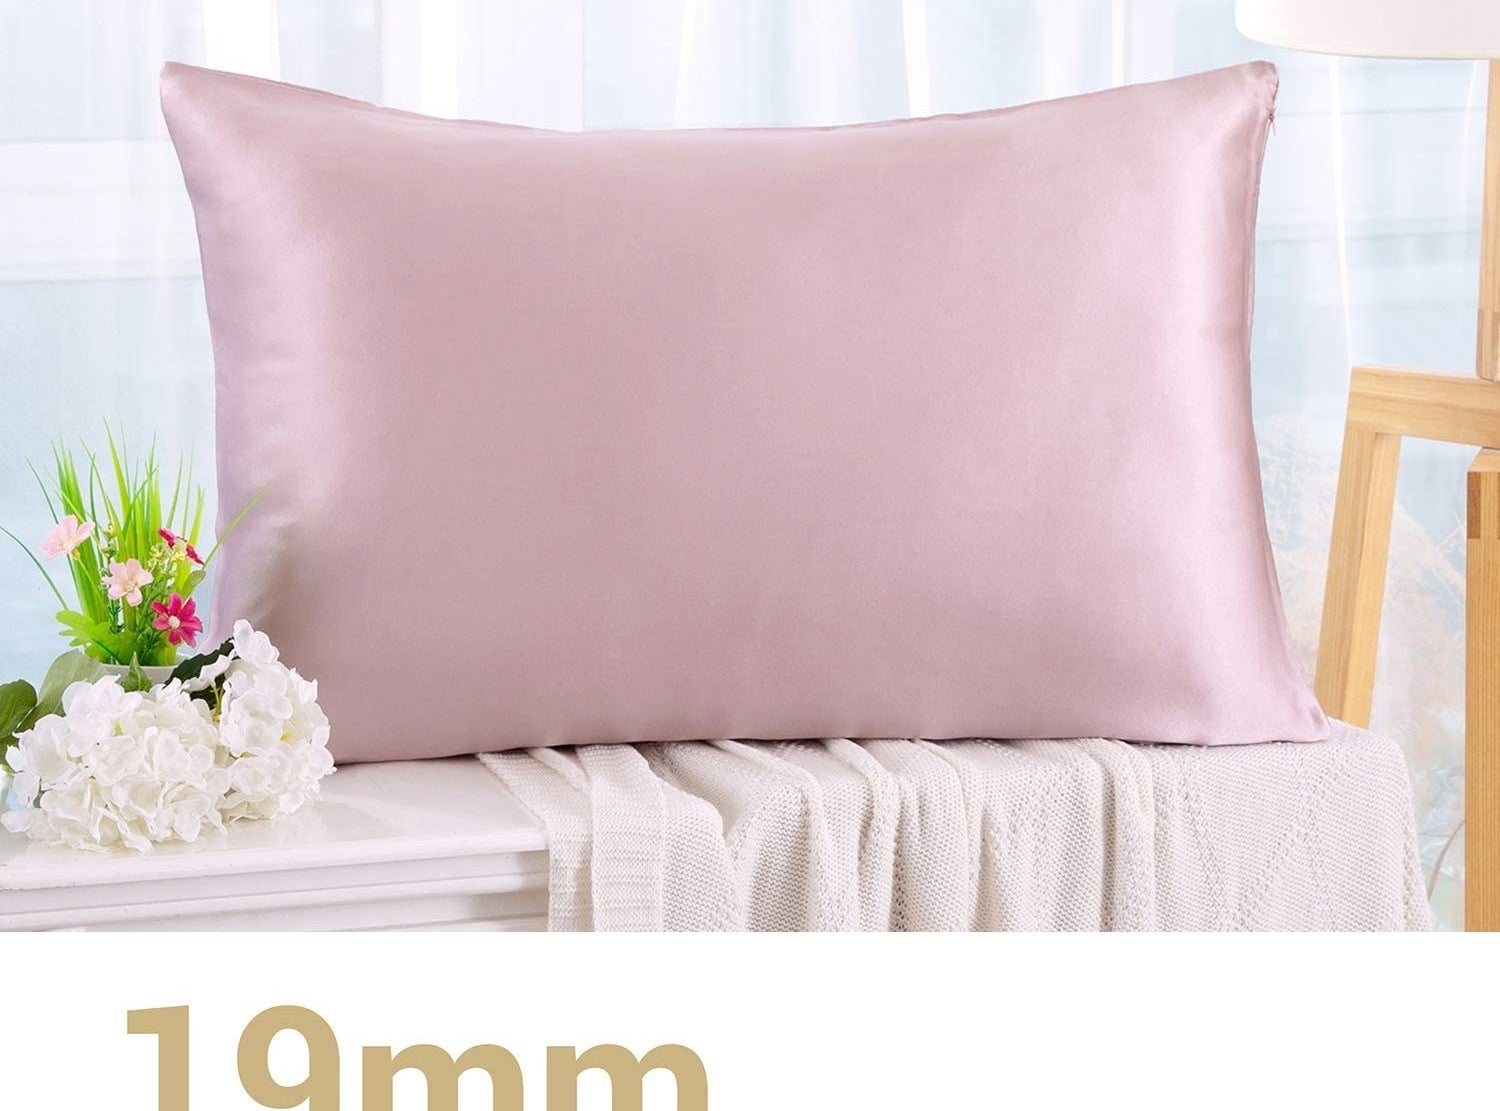 Zimasilk silk pillowcase in the shade light plum